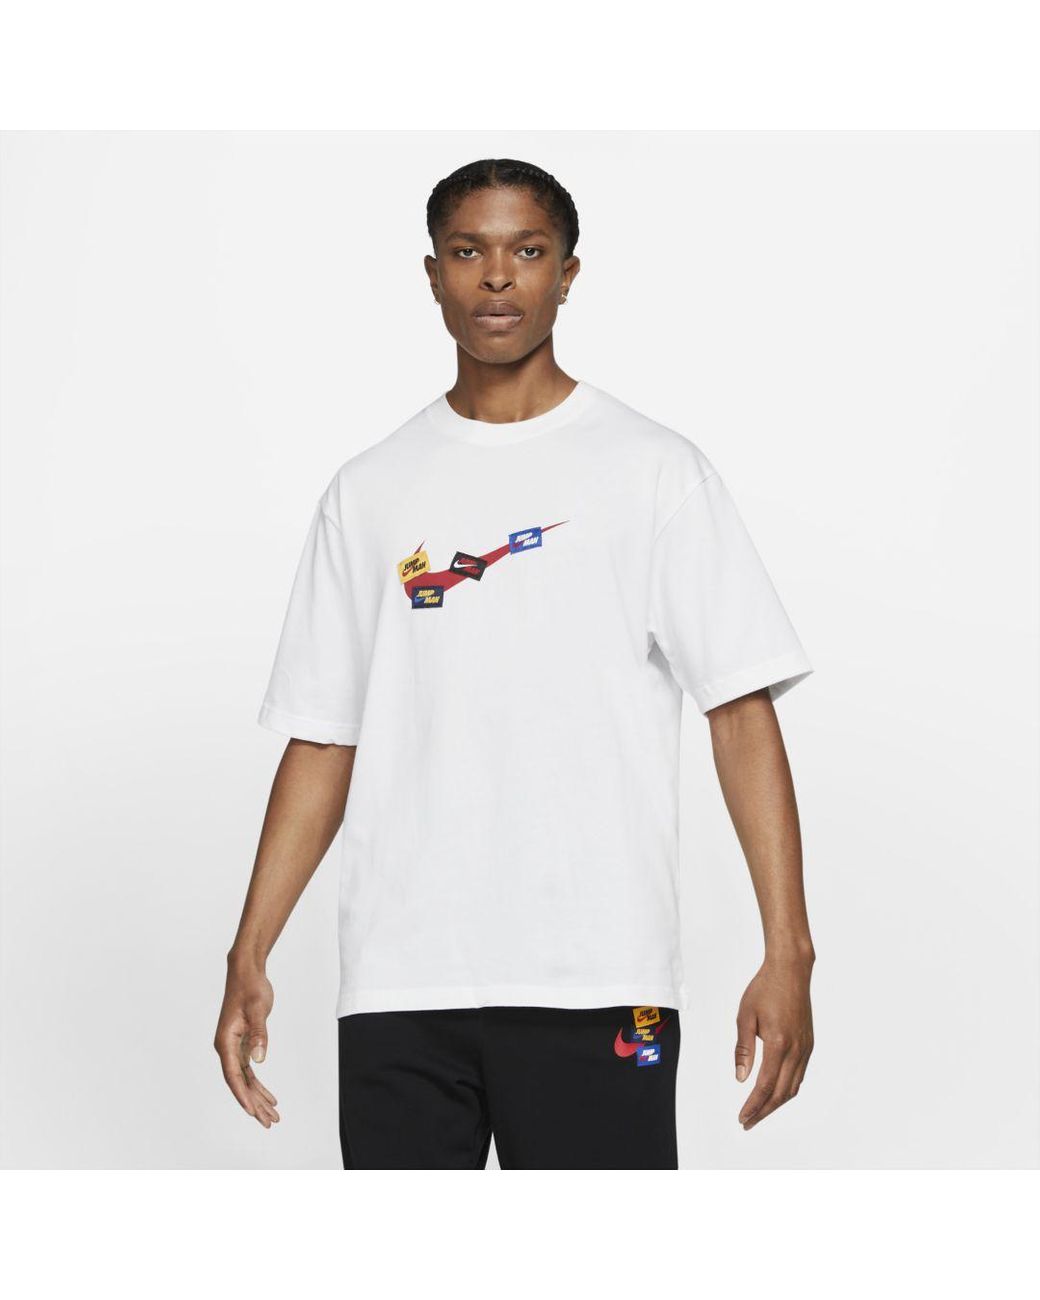 Nike Cotton Jordan Jumpman 85 Short-sleeve T-shirt in White for 